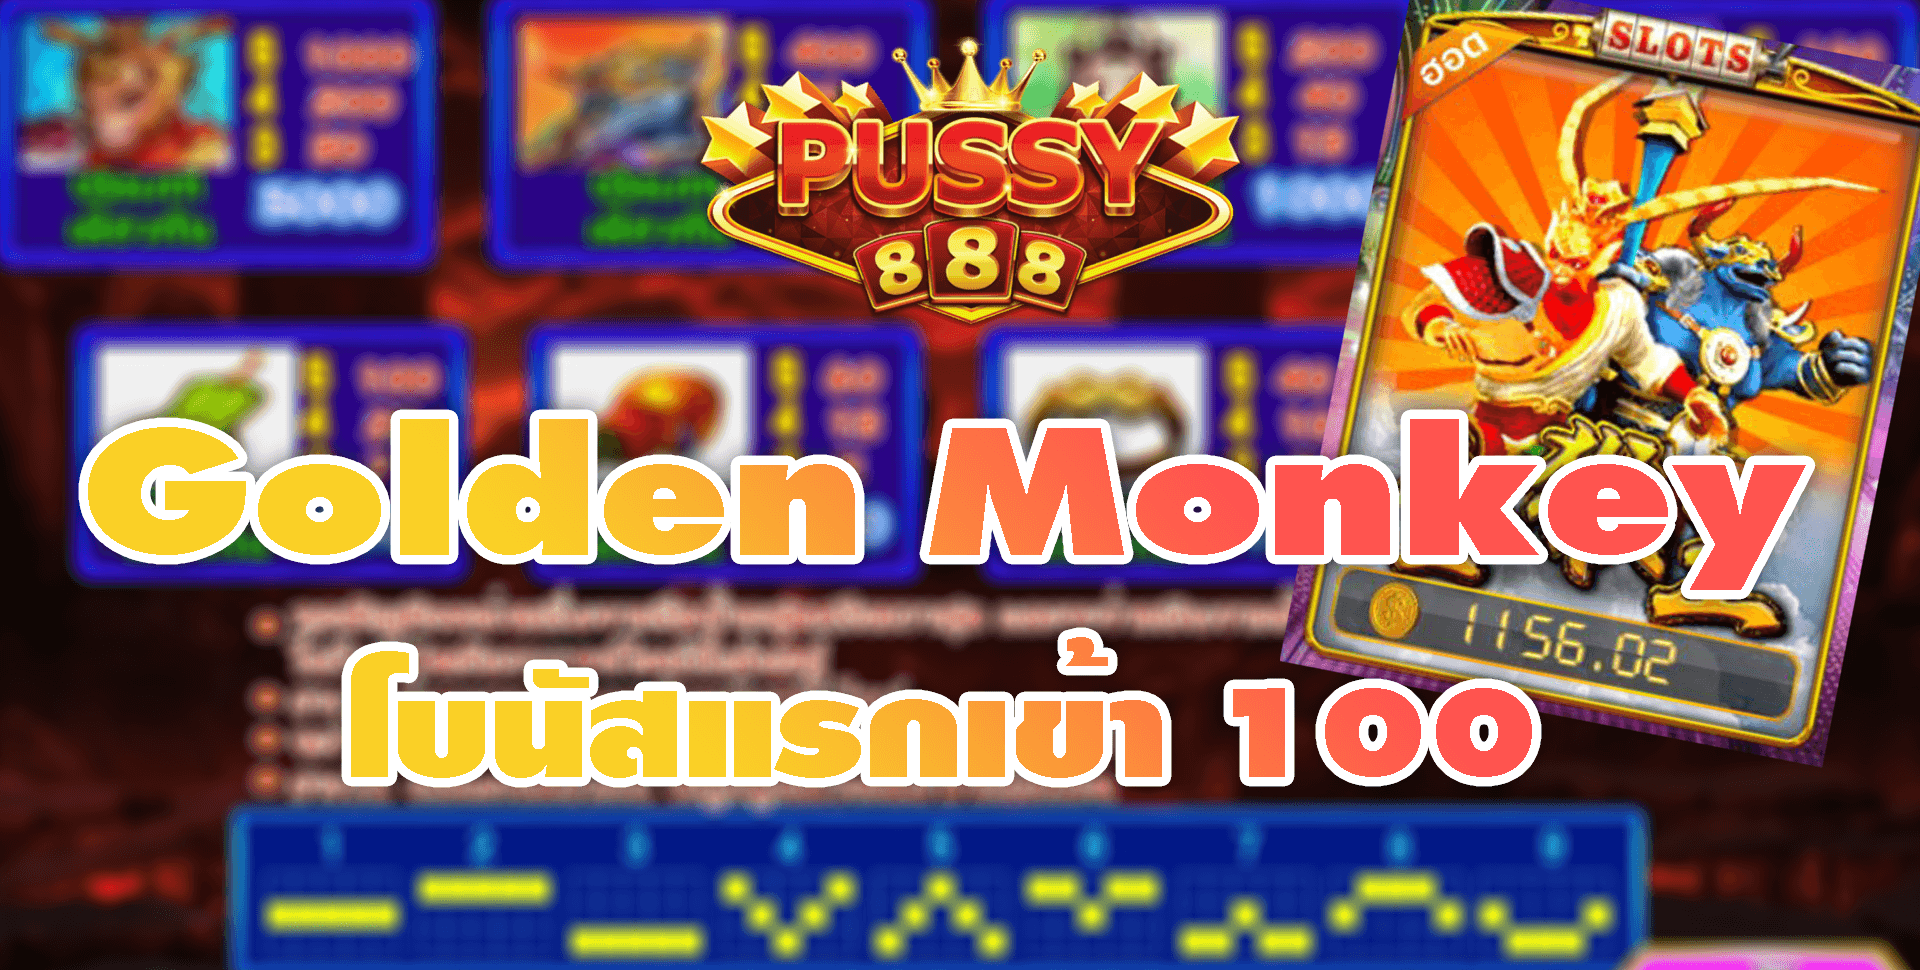 Pussy888-Golden Monkey-puss888-5